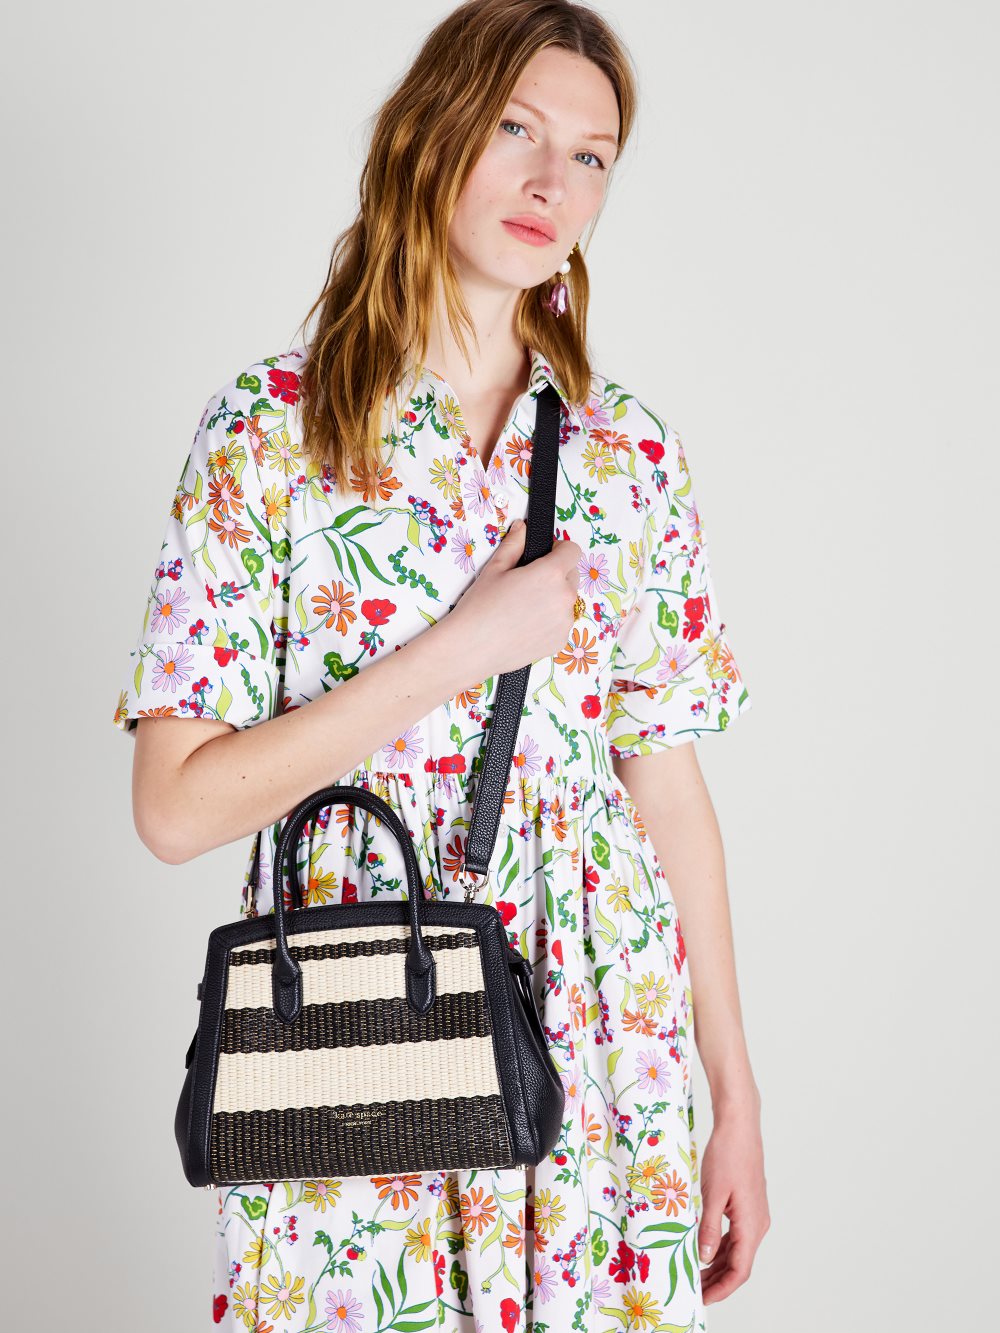 Women's black multi. knott striped straw medium satchel | Kate Spade